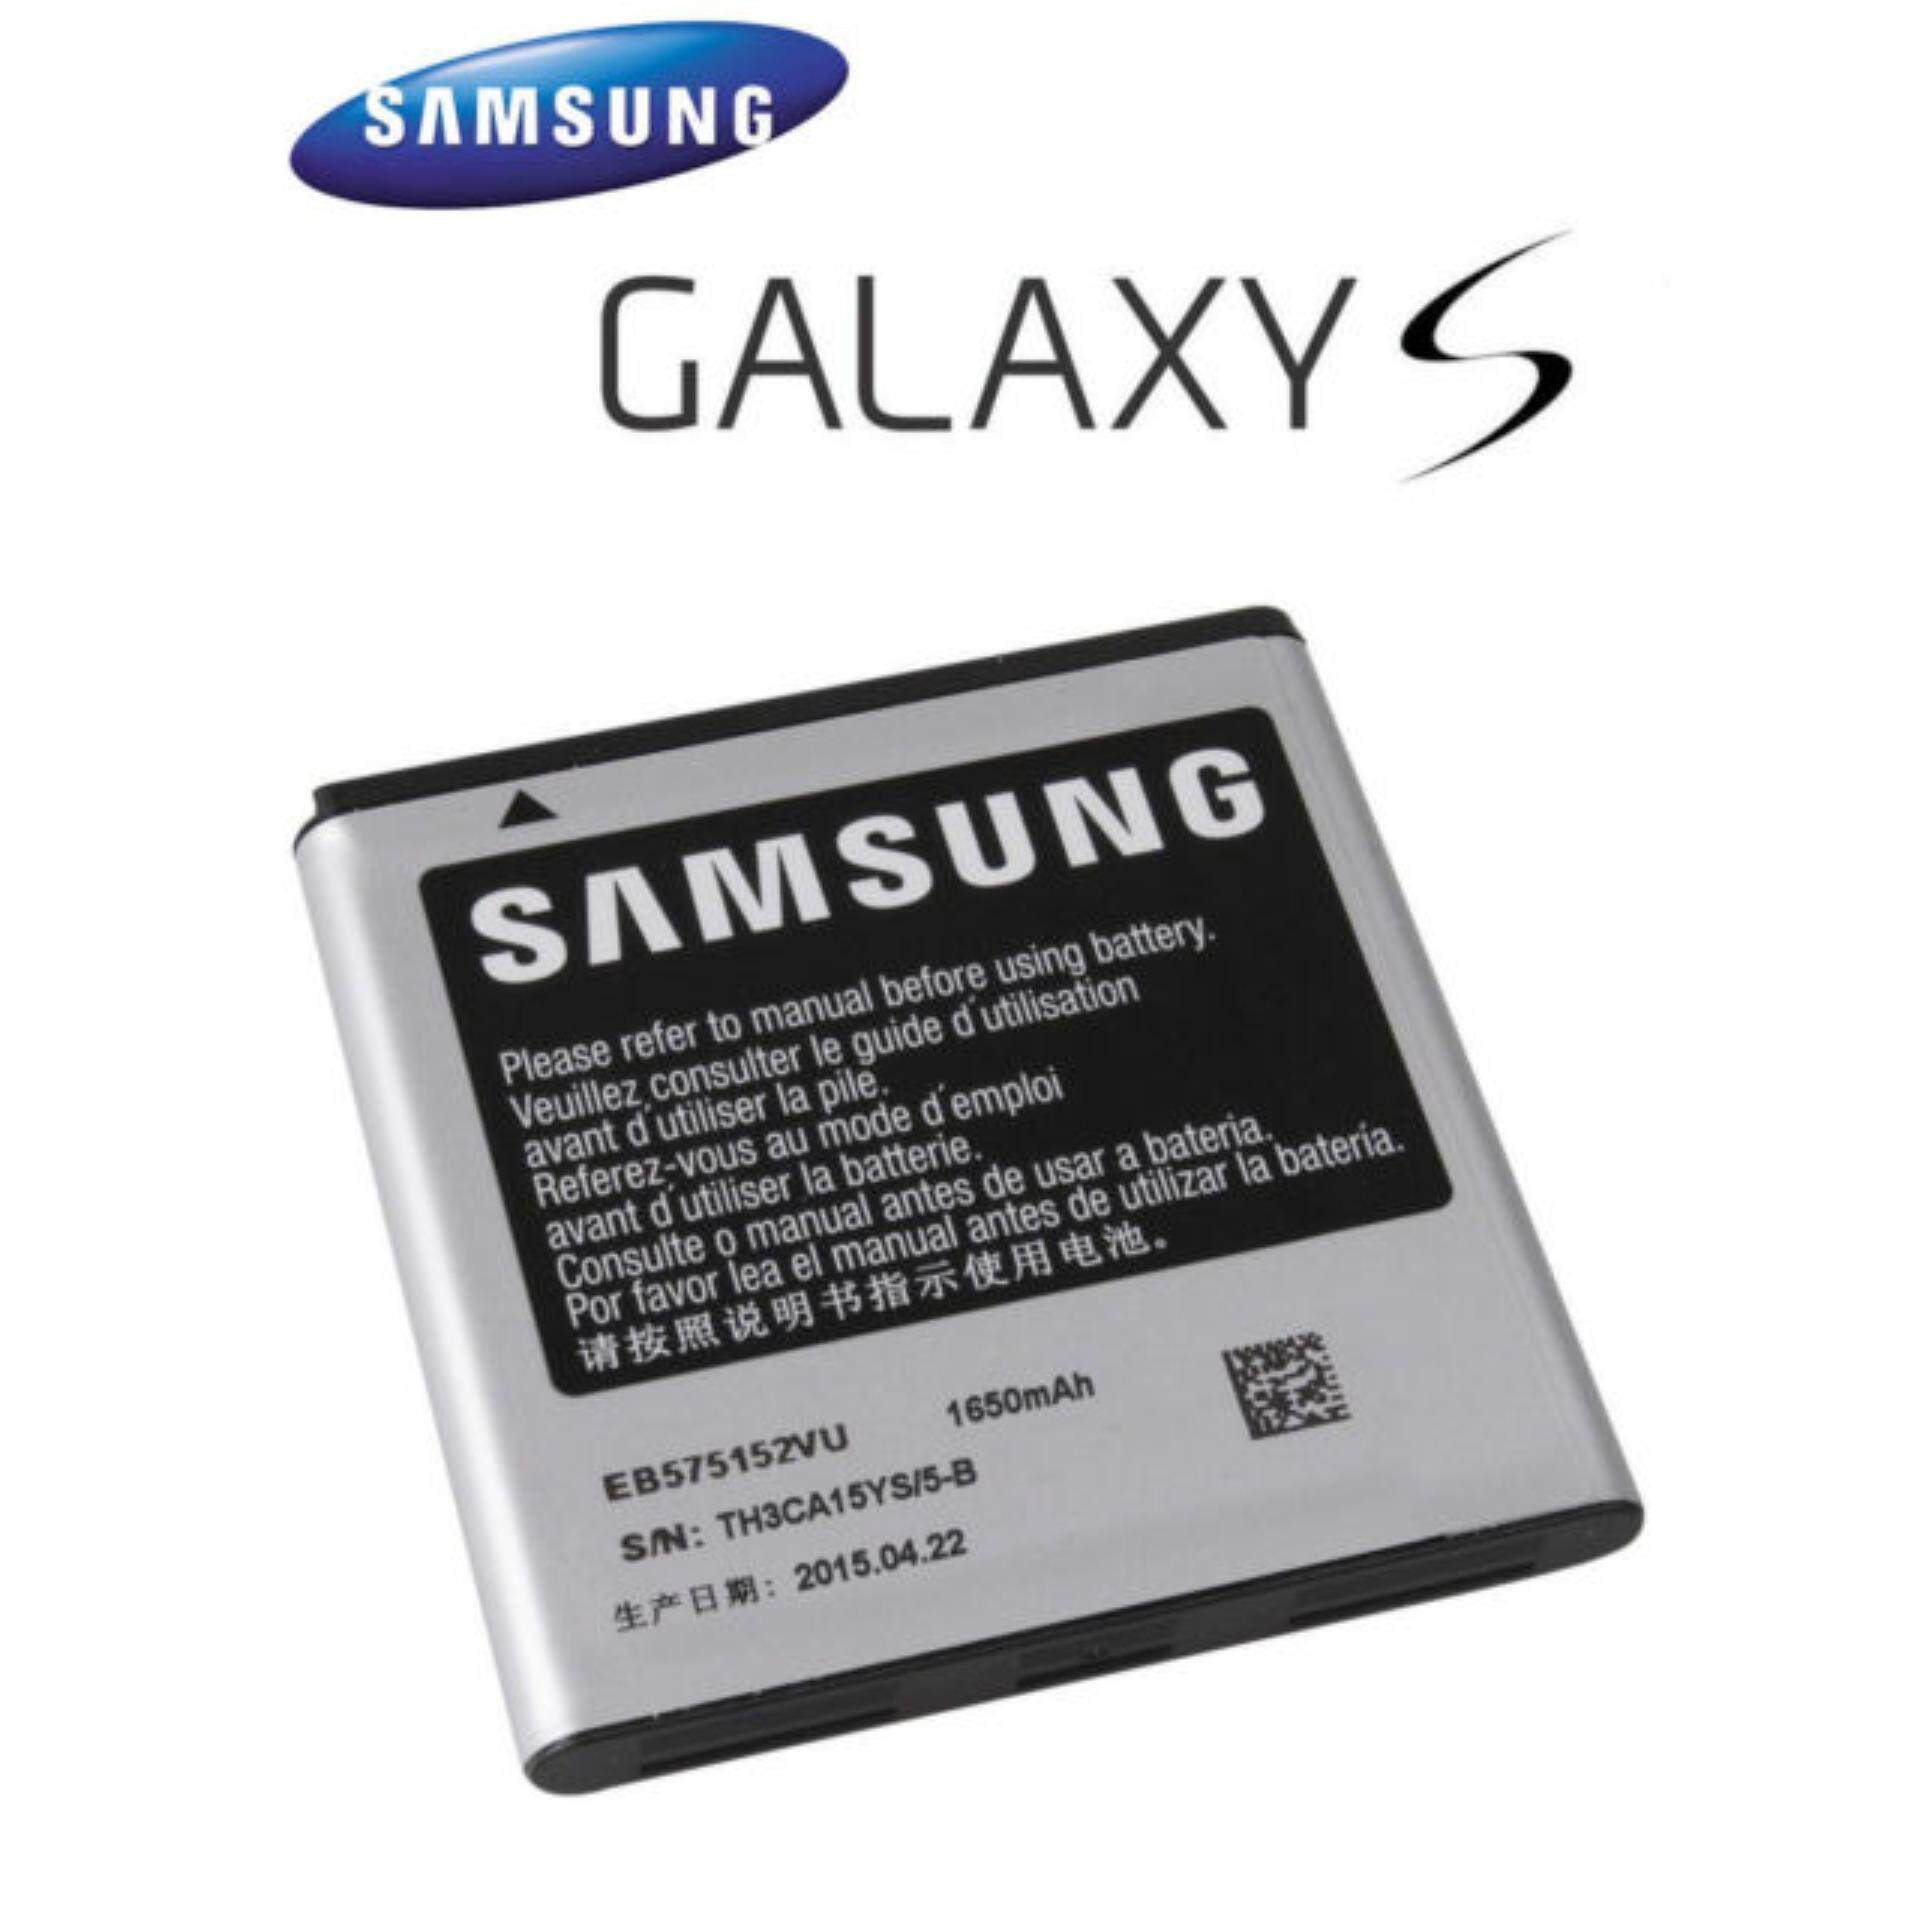 Plant Remarkable shut Samsung Galaxy S / S Plus / SL Battery (i9000 / i9003) | Lazada